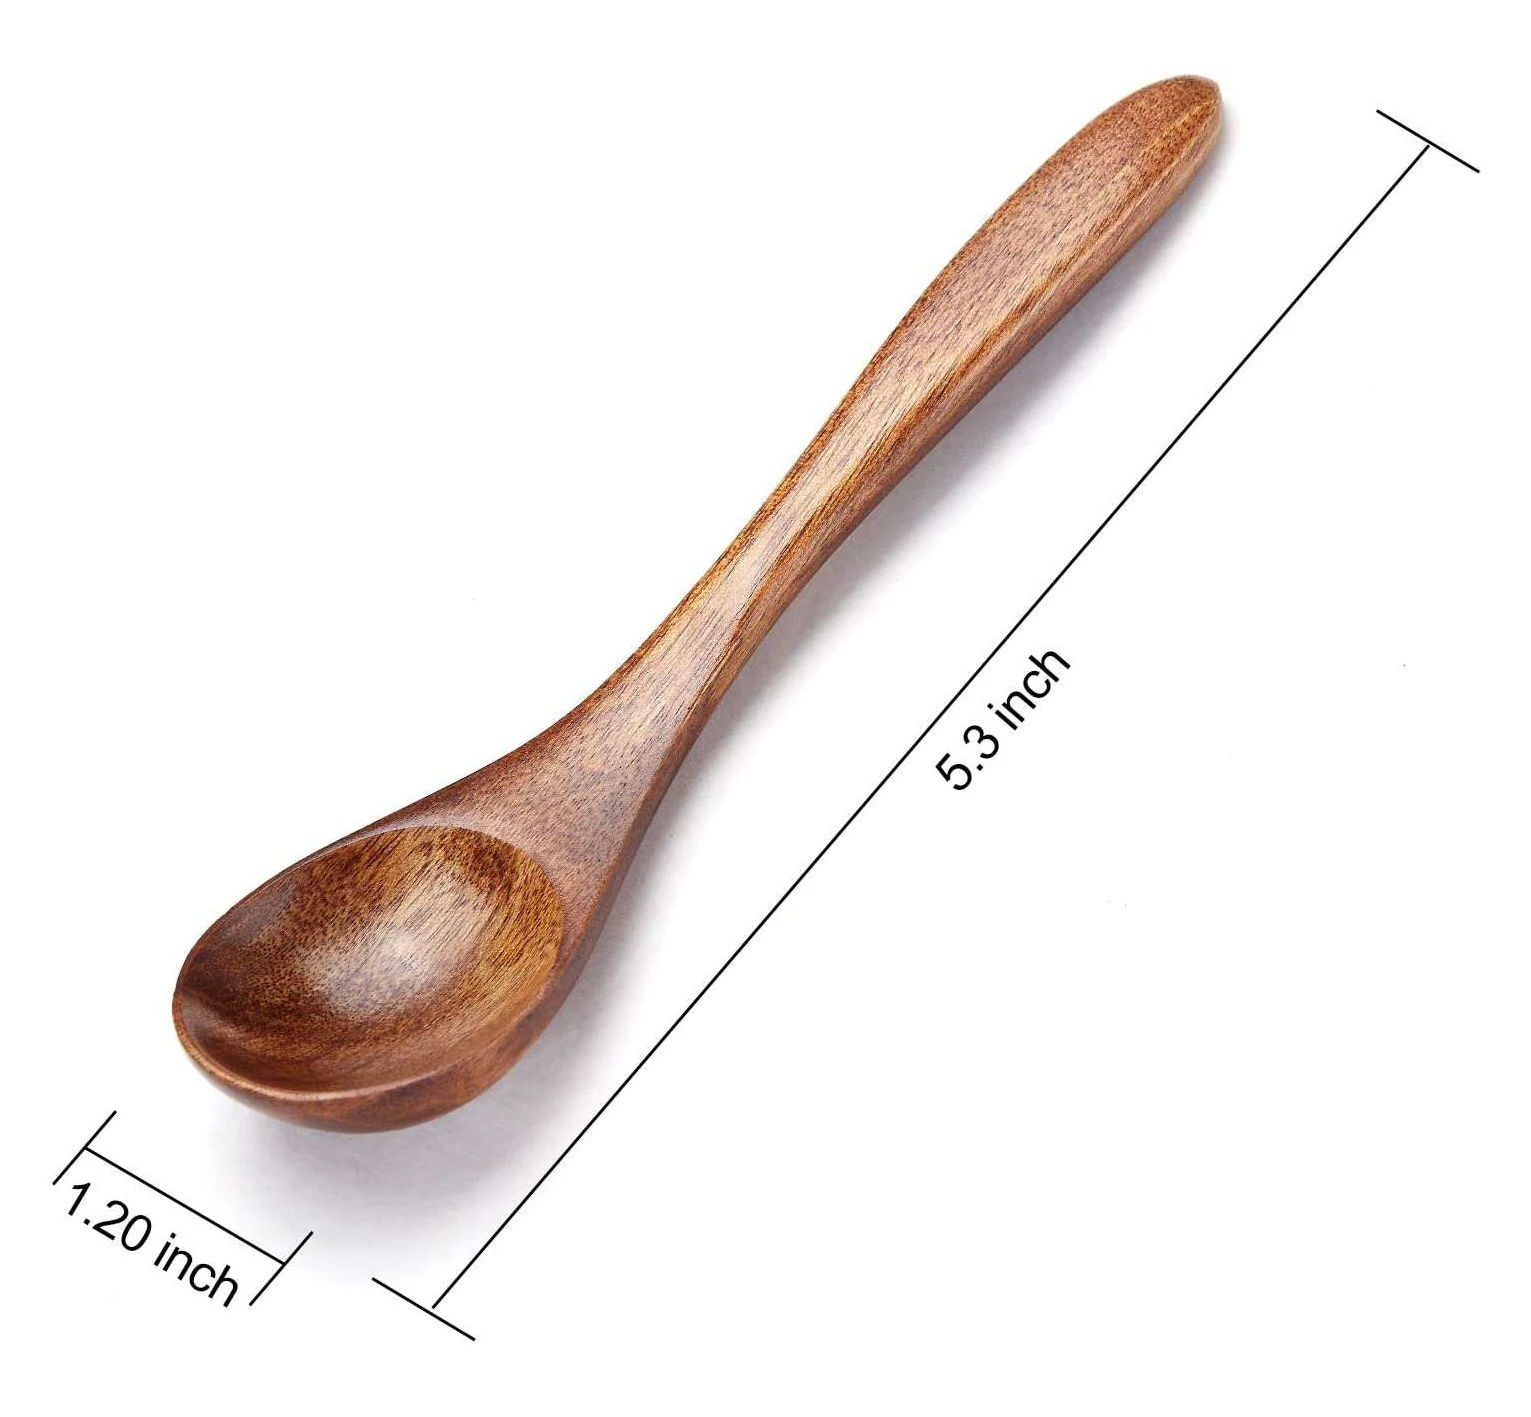 Amazon 6 pcs set wooden long handle spoon  kitchen utensils tableware